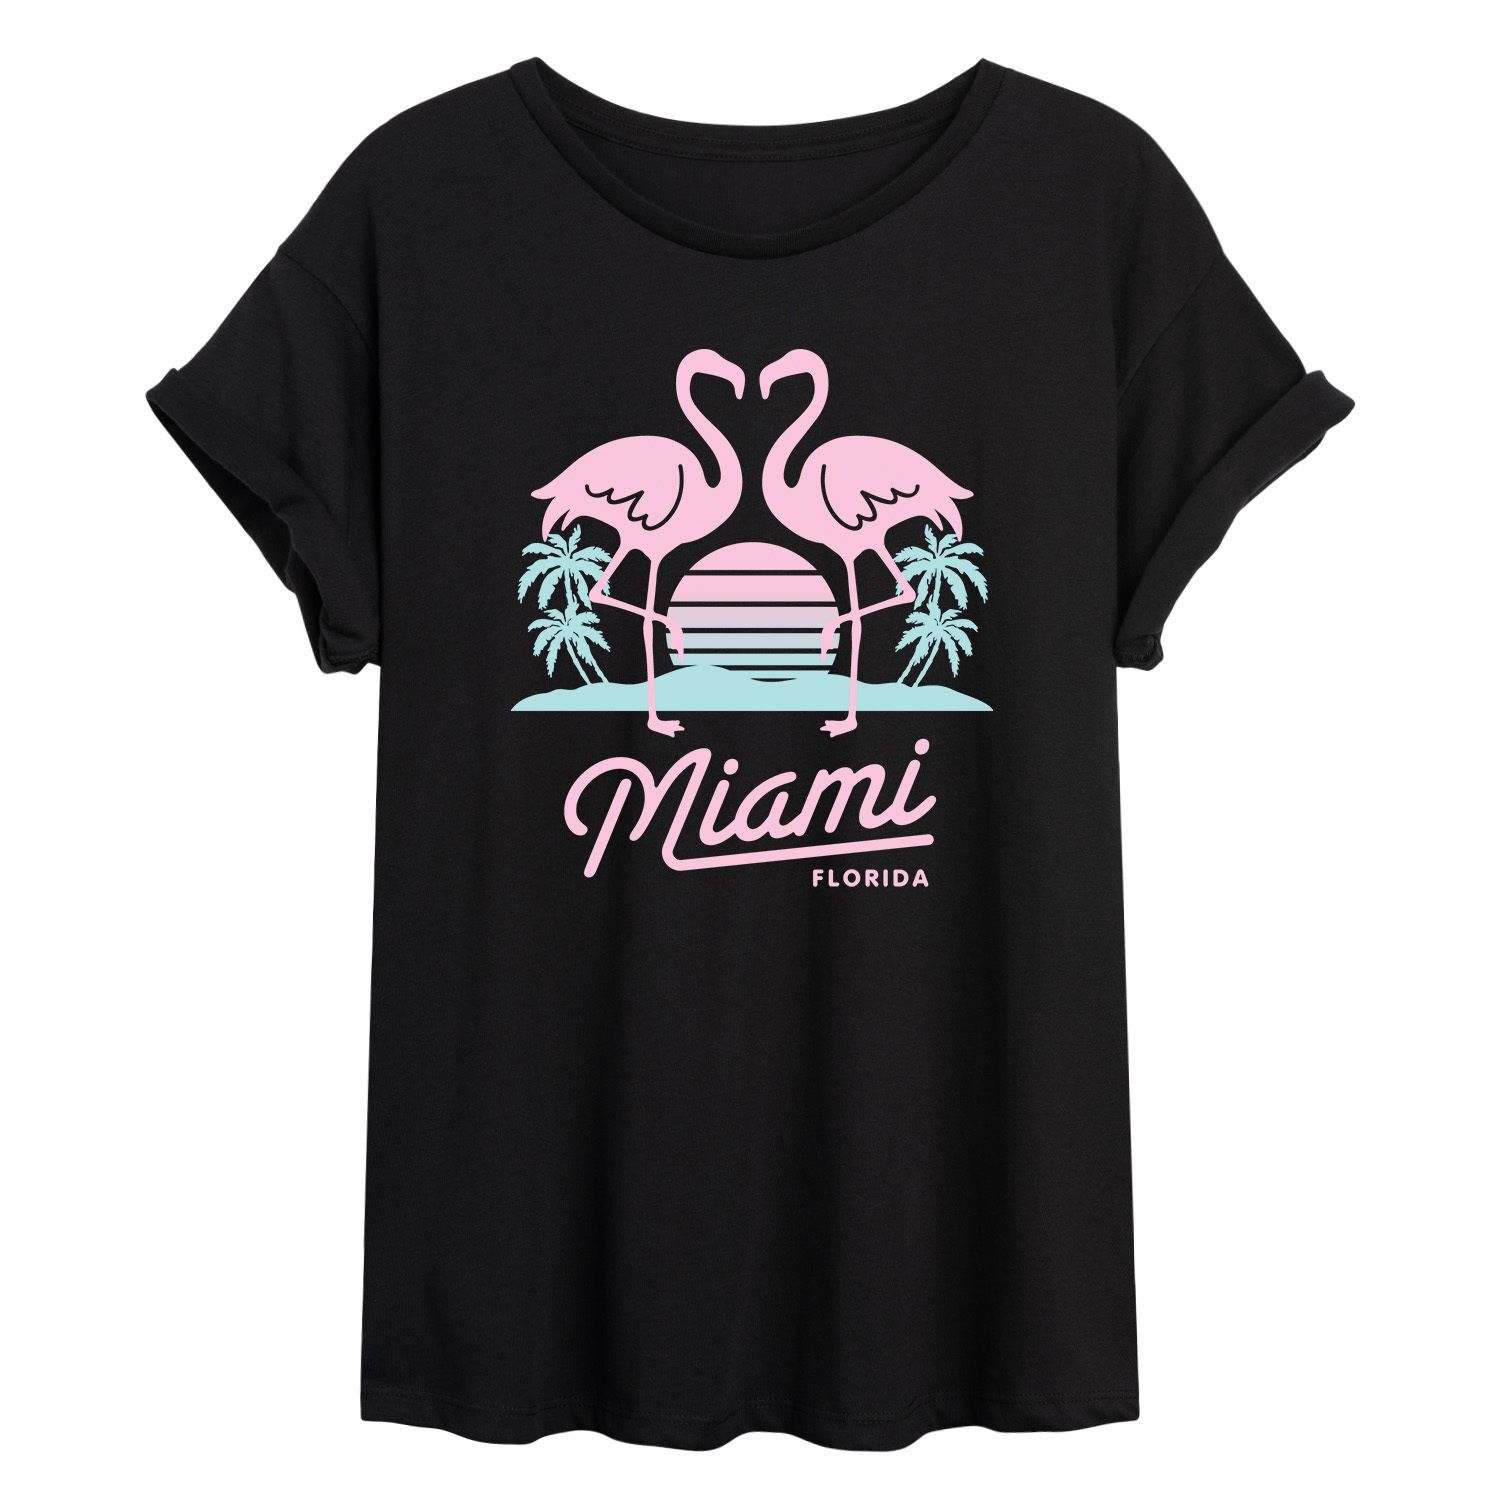 Размерная футболка с рисунком Miami Flamingos для юниоров Licensed Character